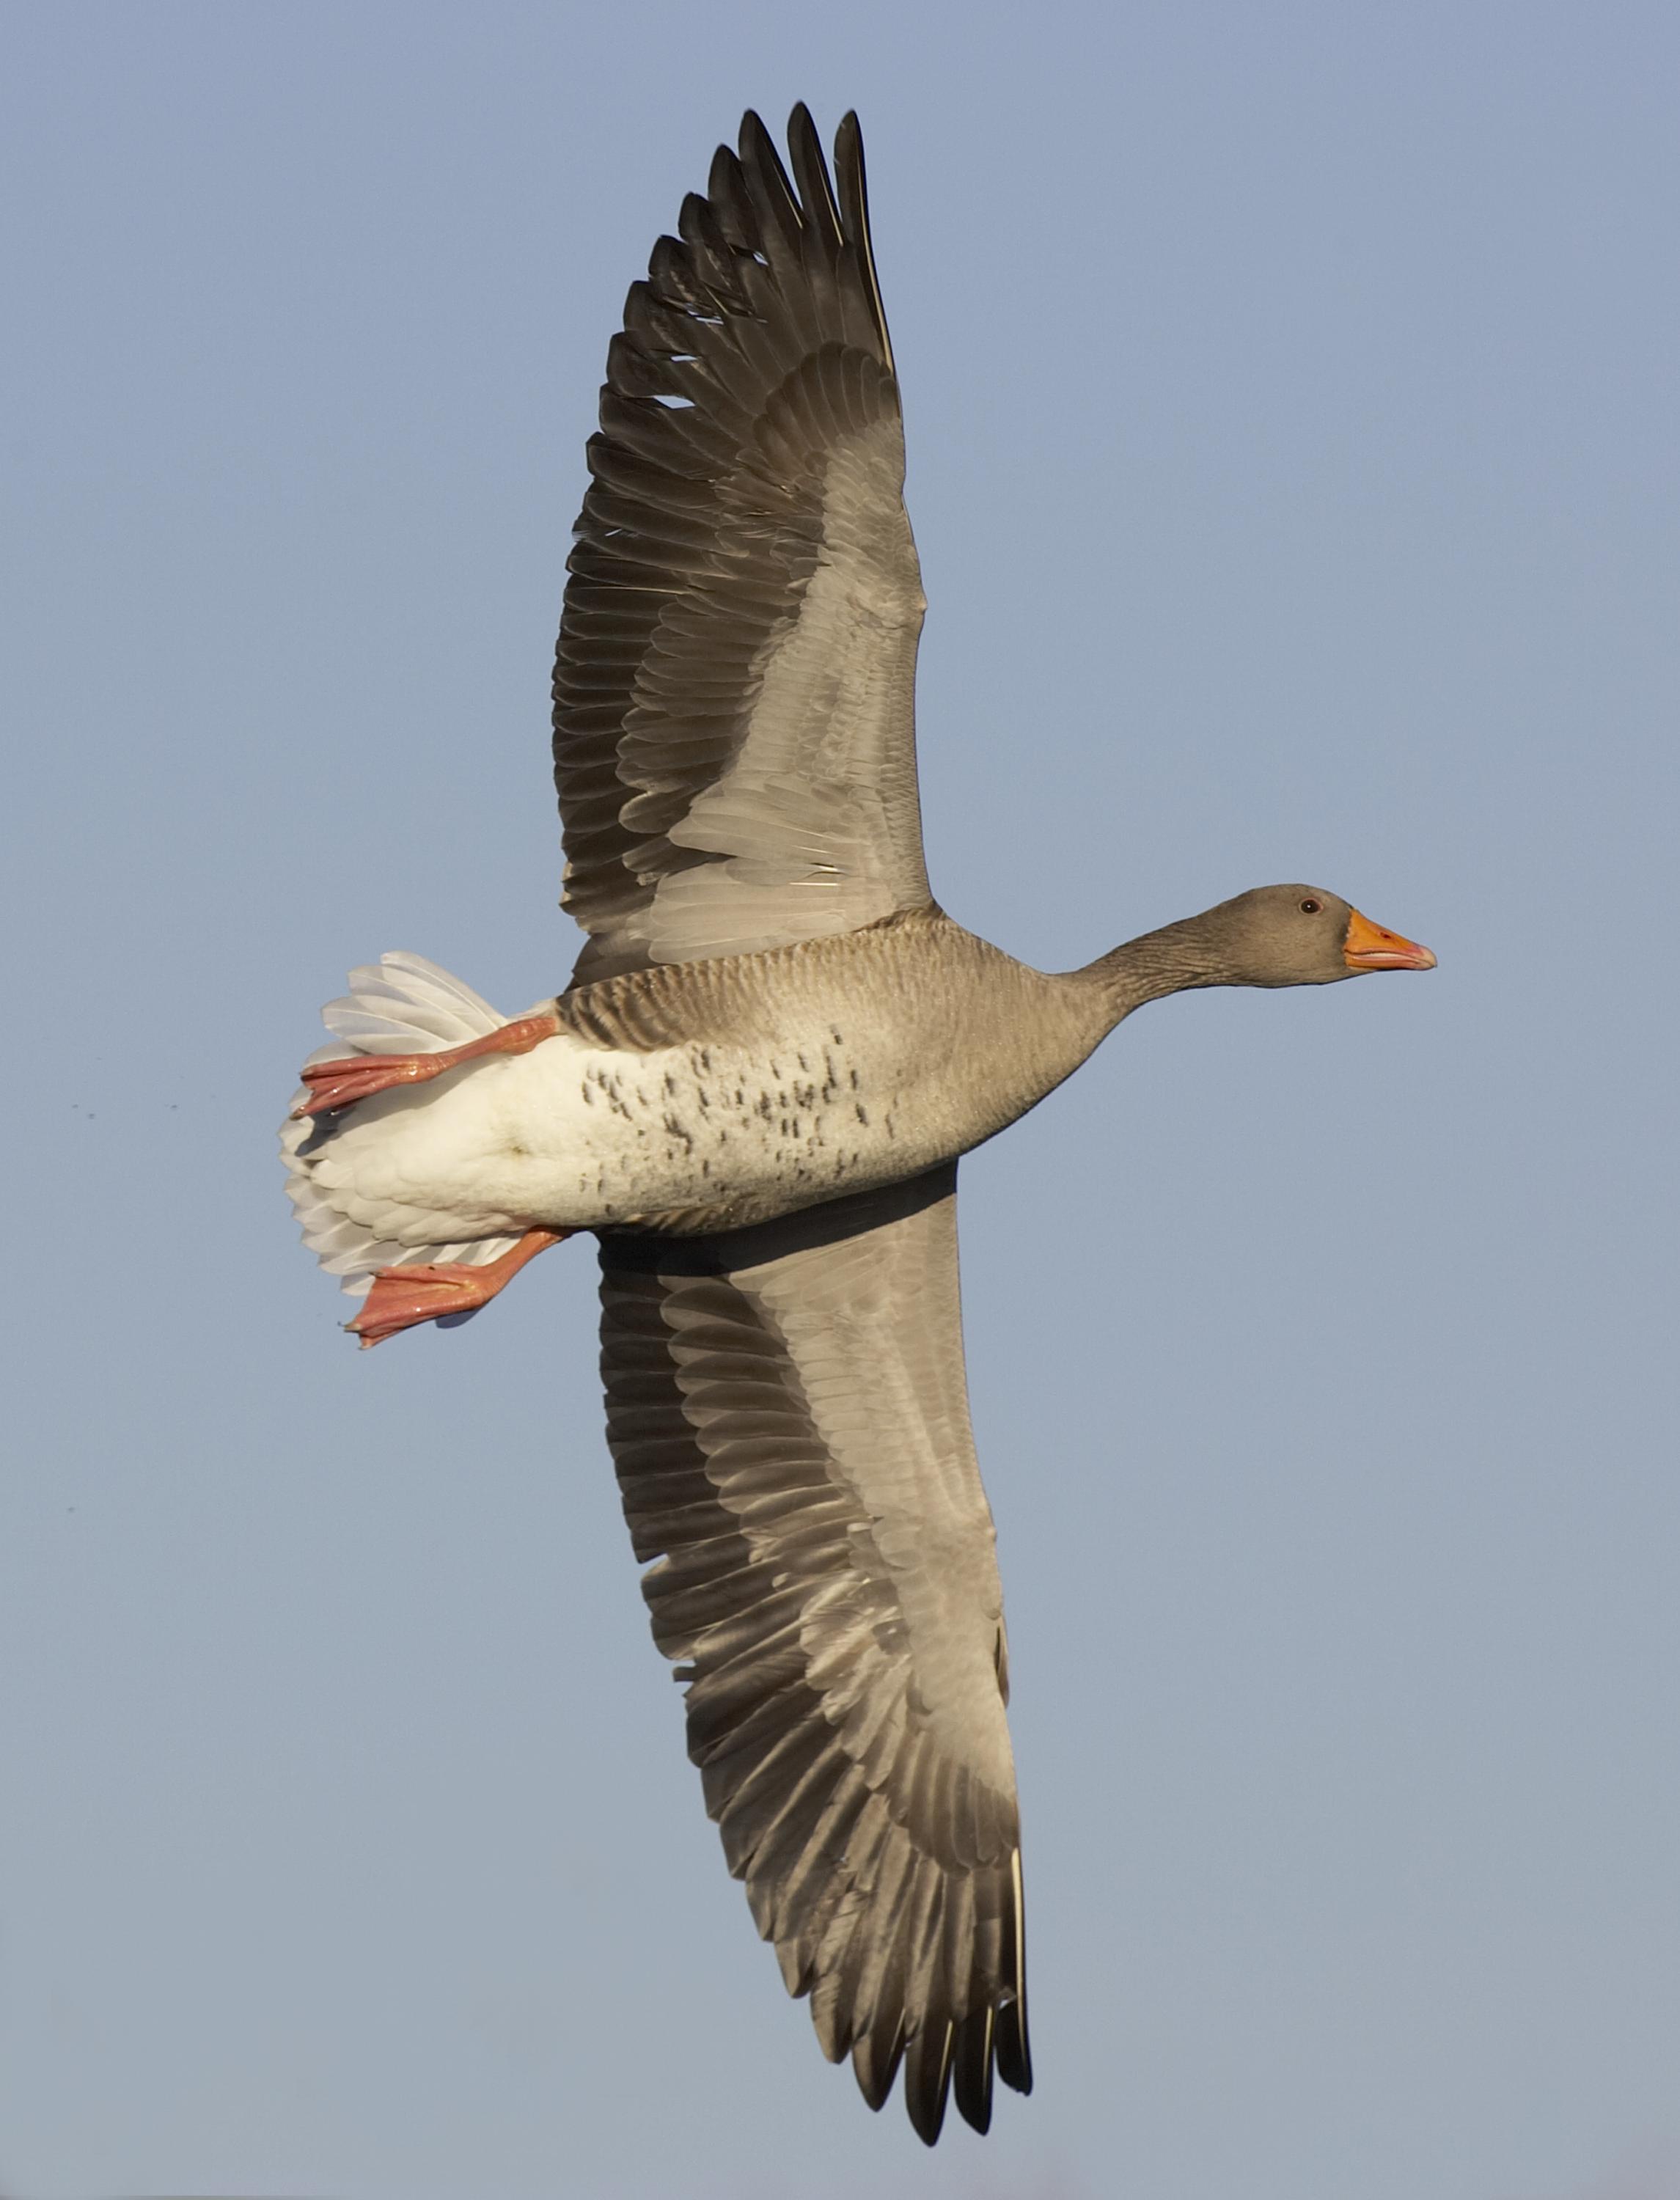 Wild Scotland wildlife and adventure tourism | Birds | Ducks, Geese ...